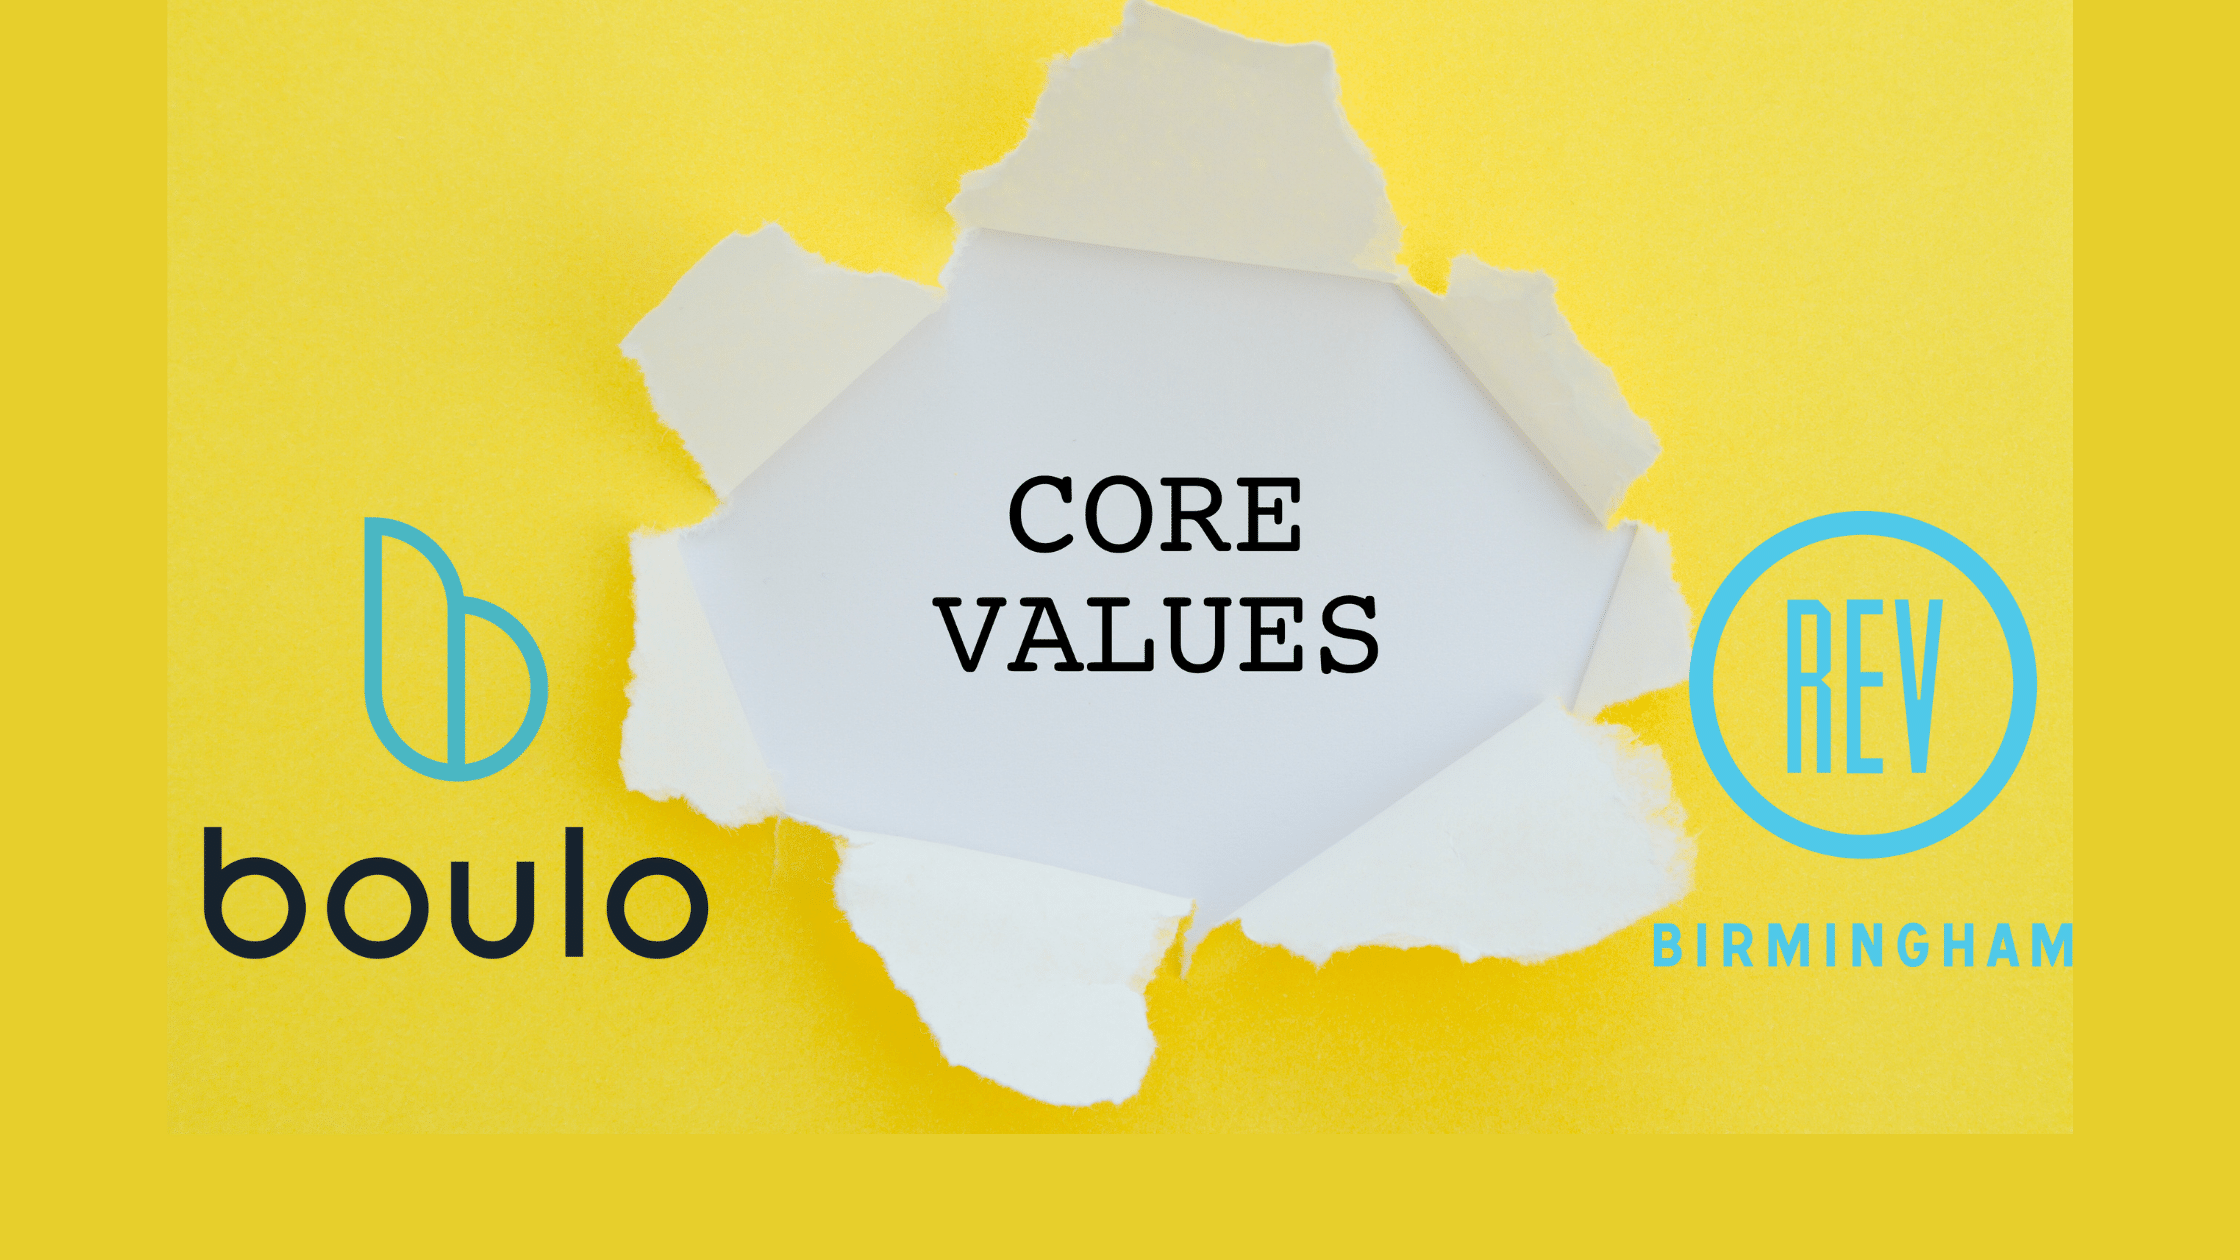 Boulo logo text Core Values Rev Birmingham logo